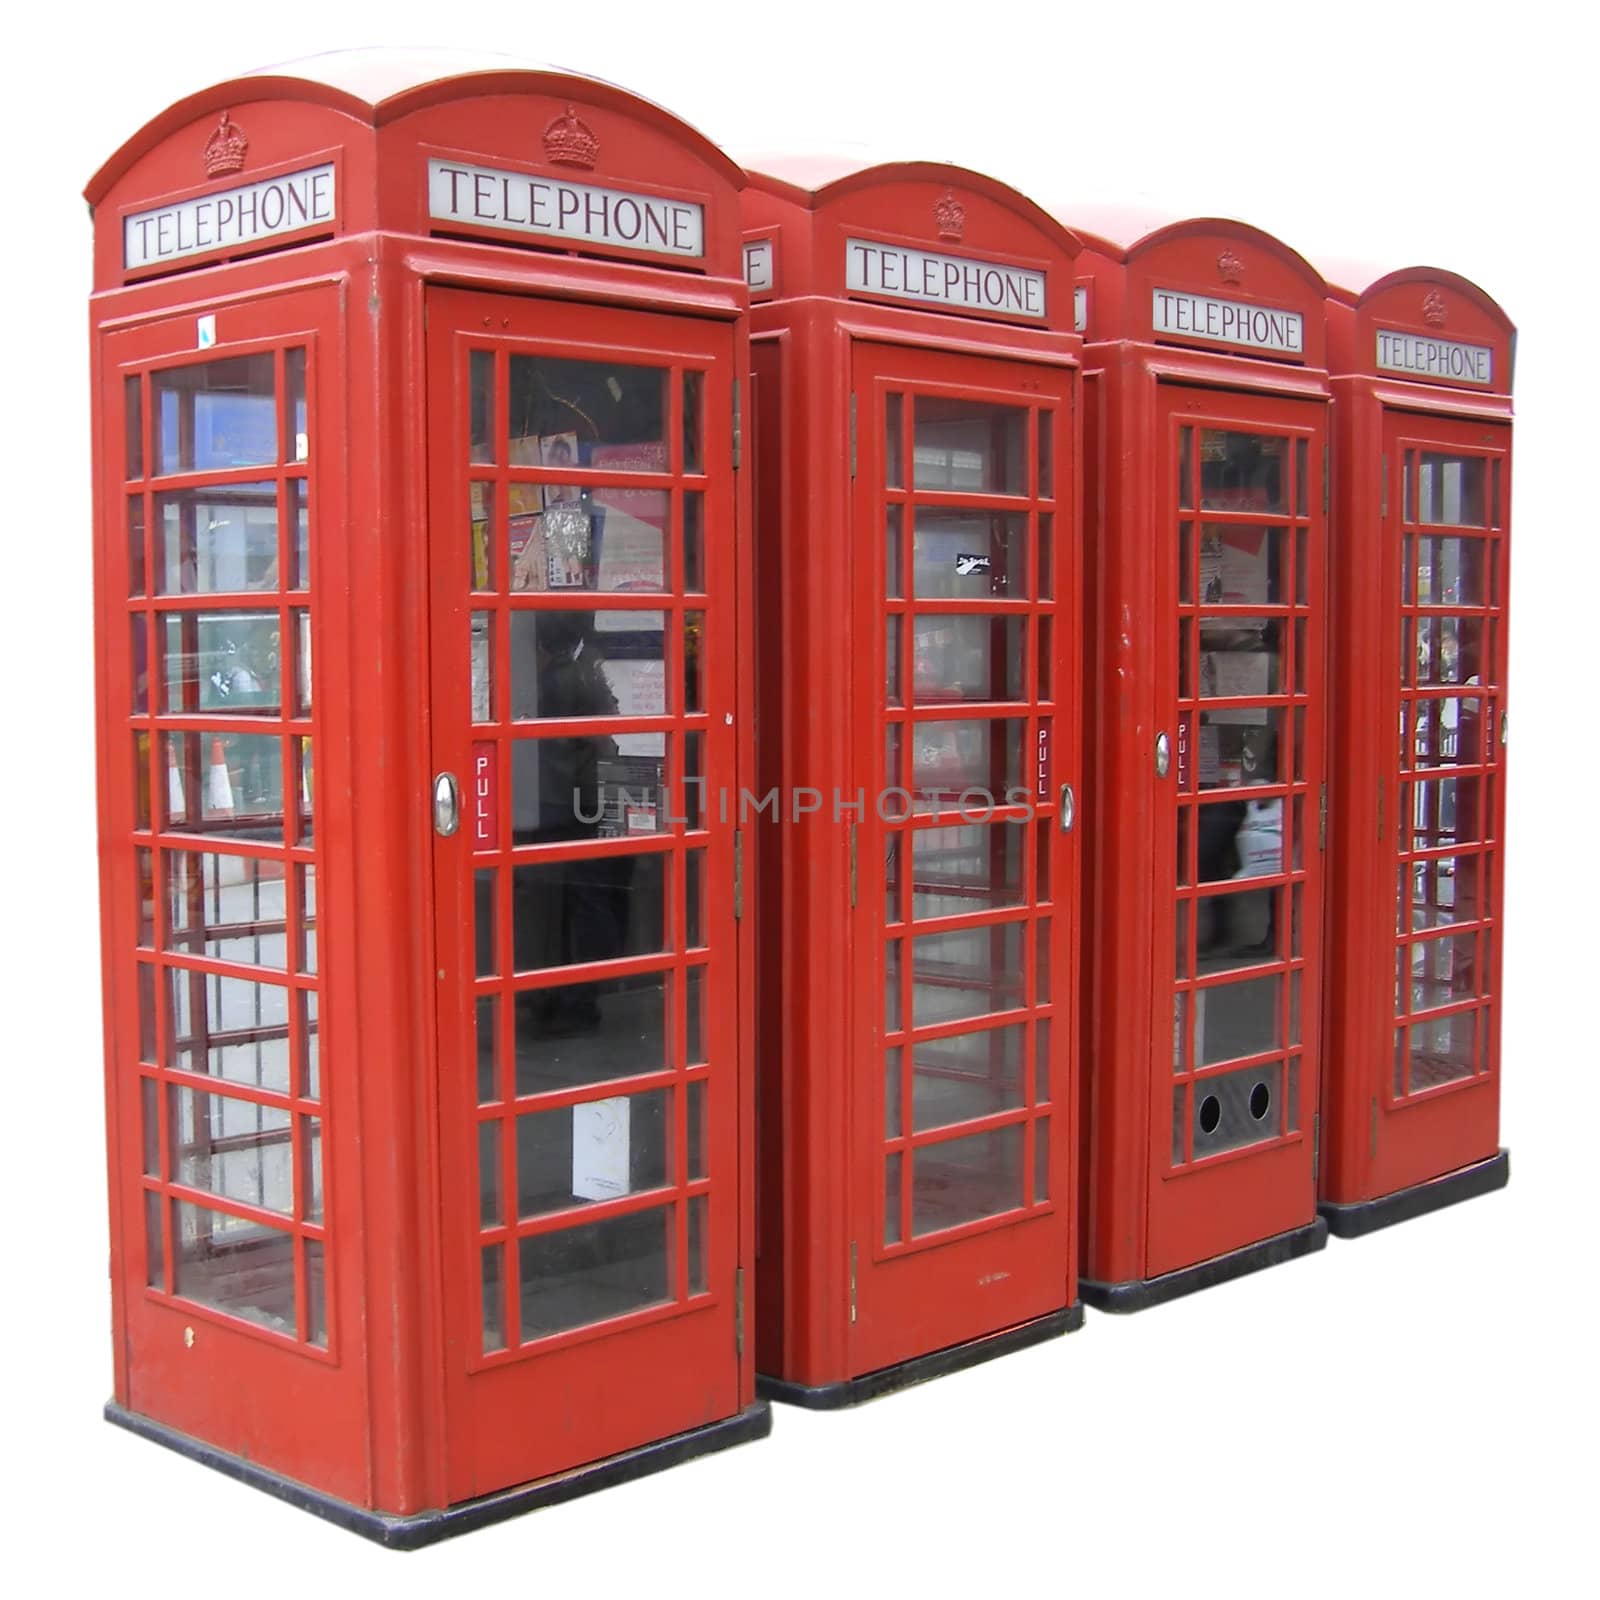 London telephone box by claudiodivizia